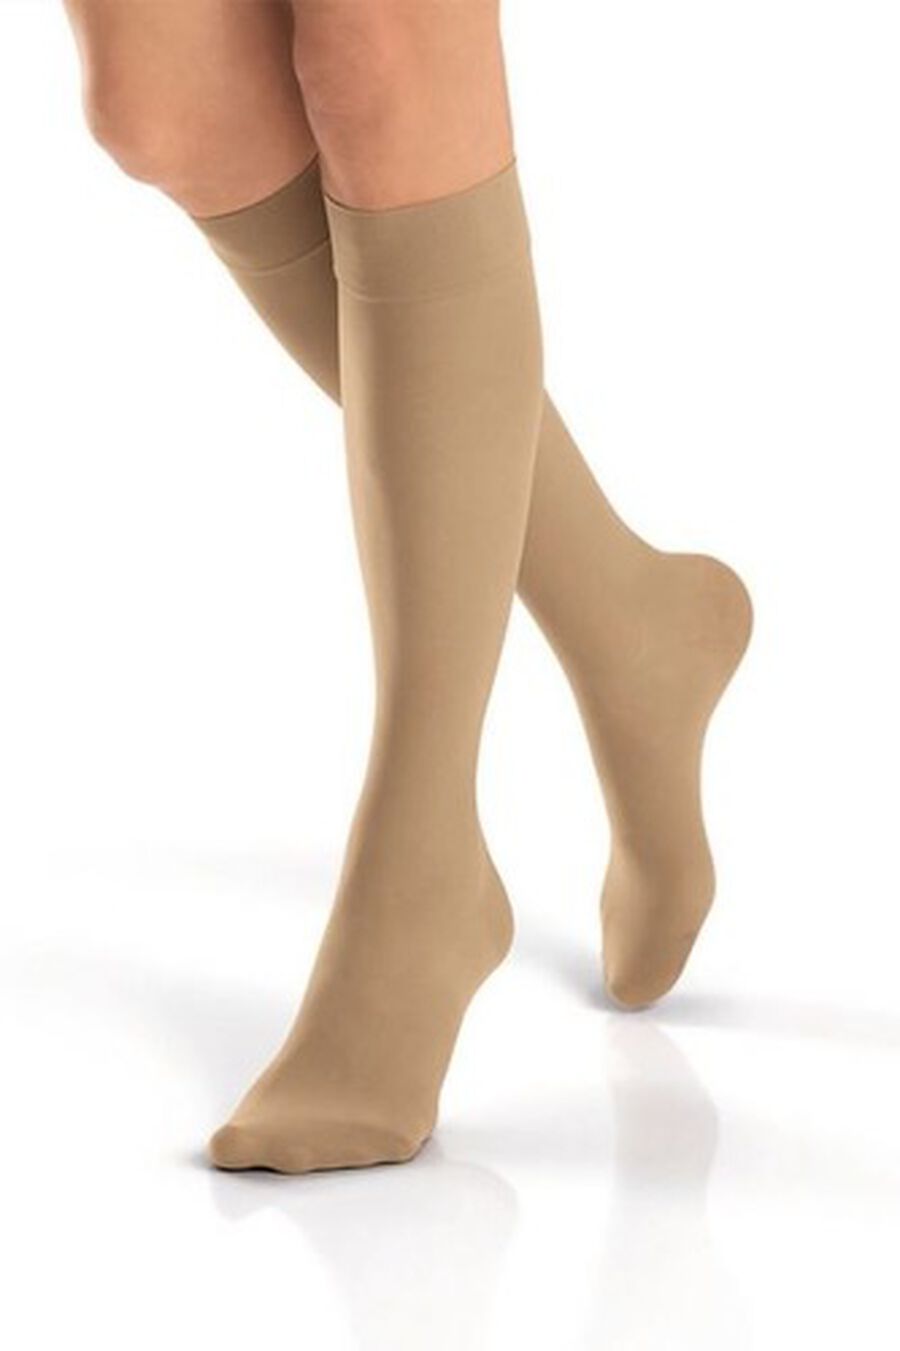 BSN Jobst Women's UltraSheer Knee-High Extra Firm Compression Stockings, Closed Toe, Medium, Suntan, , large image number 2